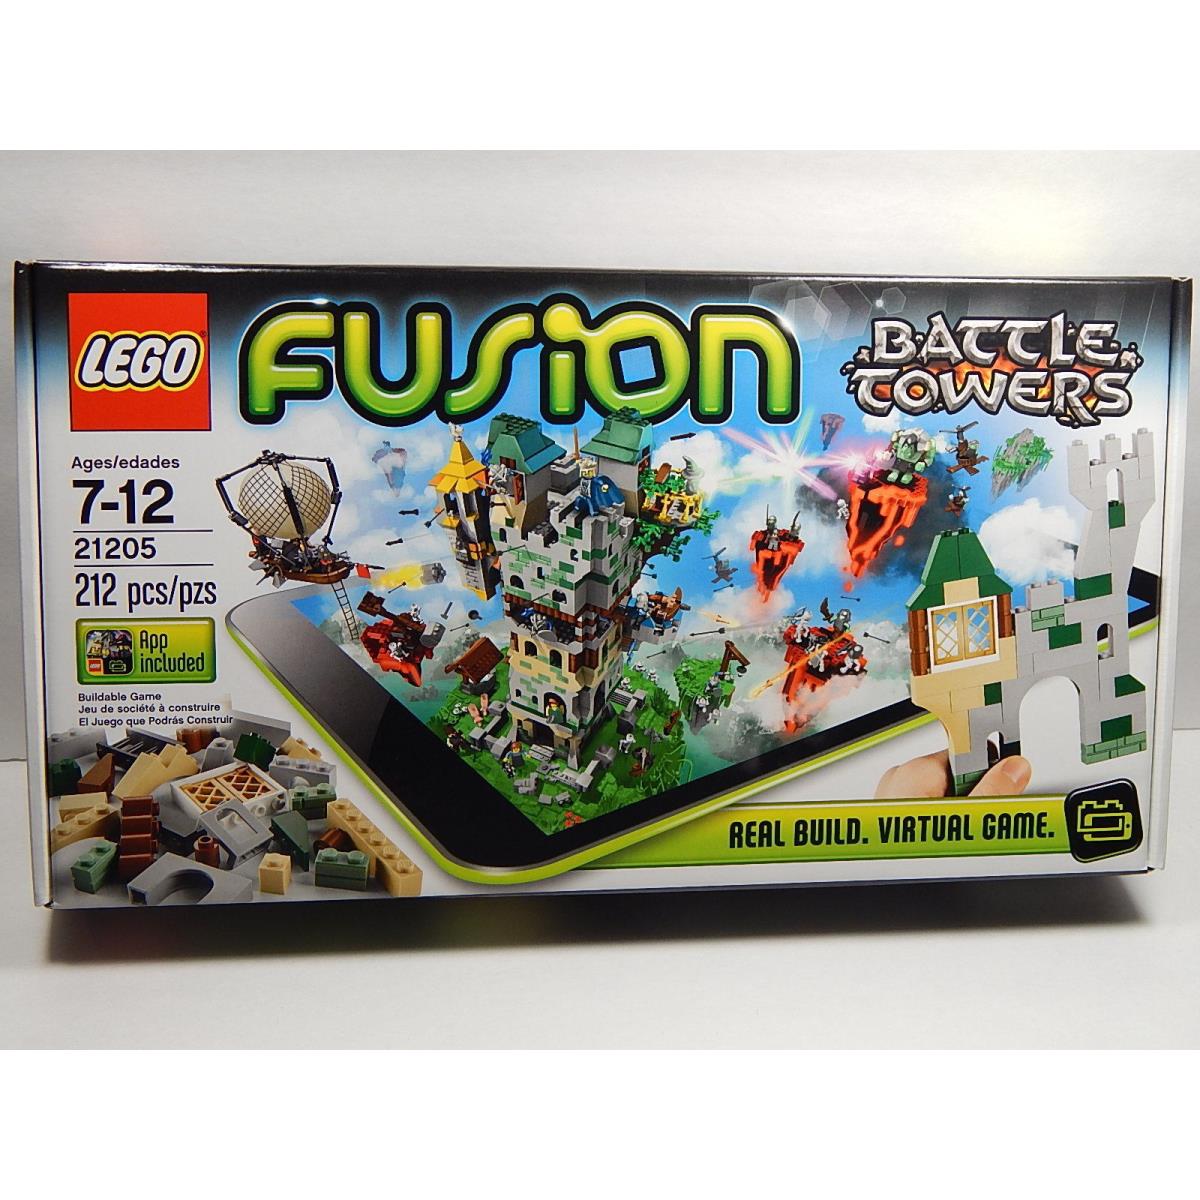 Lego Fusion Set 21205 Battle Towers 212 Pieces